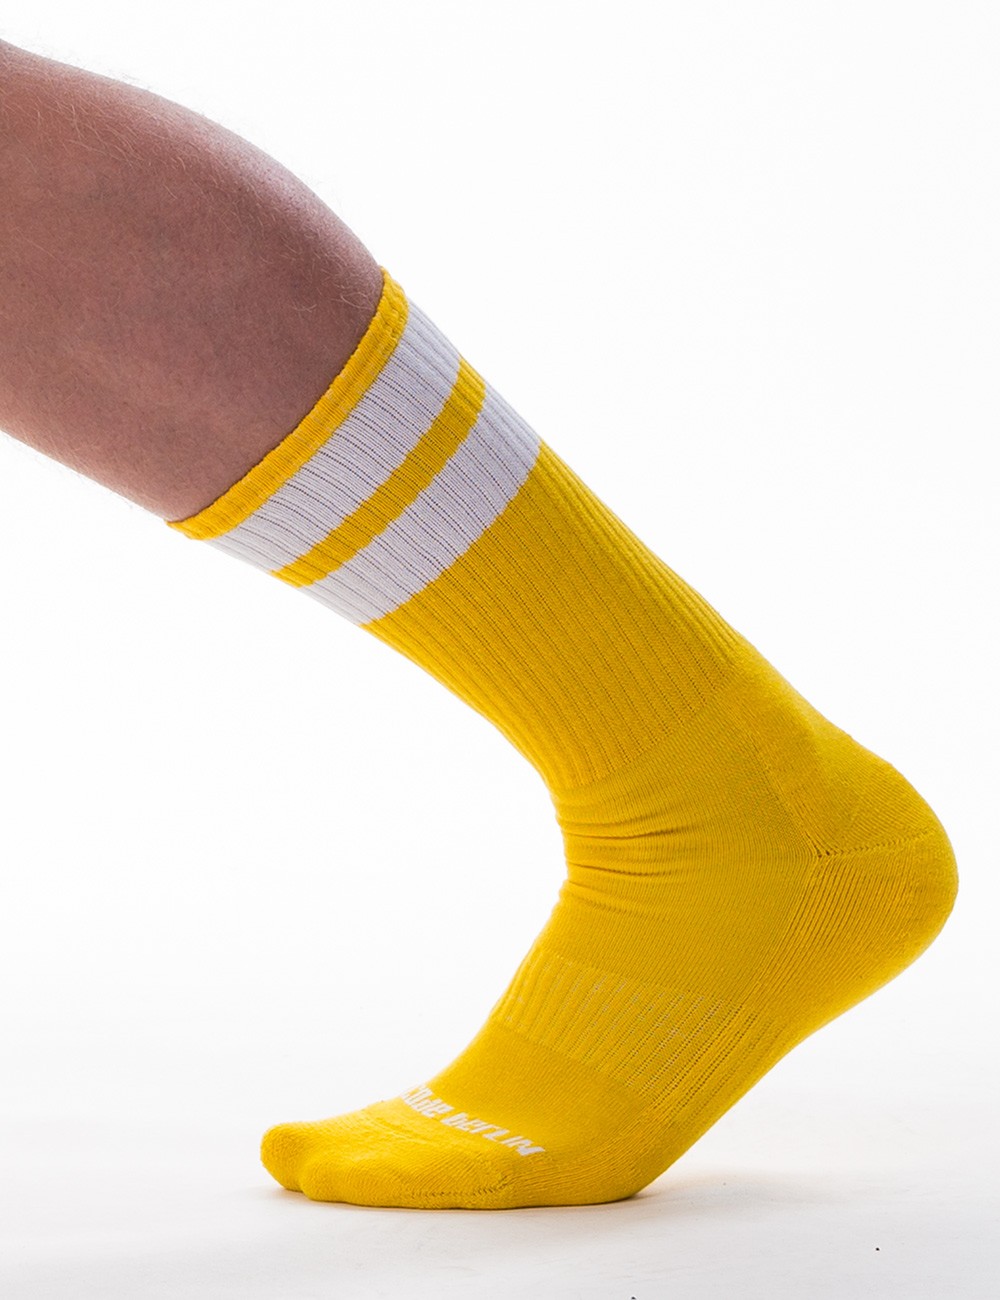 Gym Socks - Yellow-White